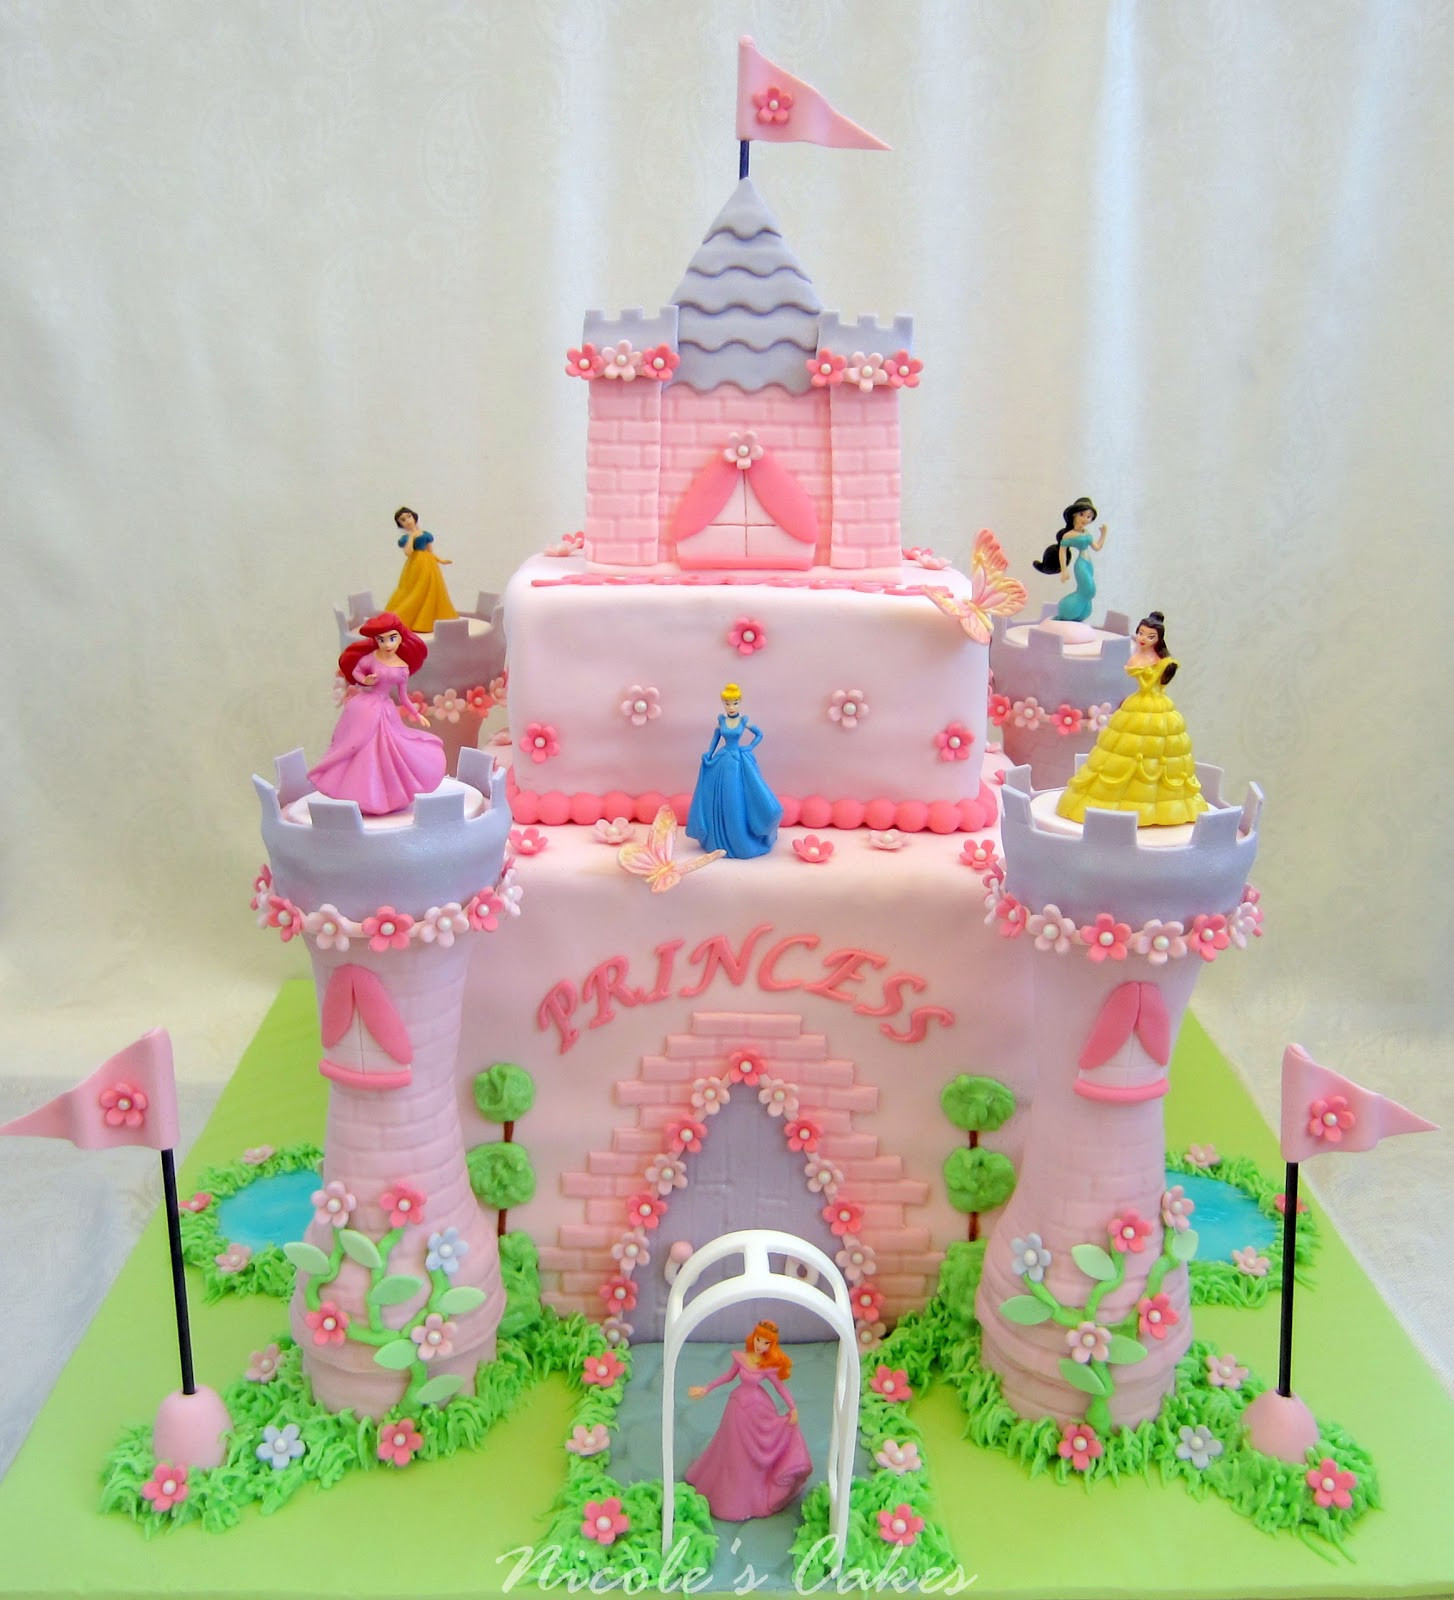 Best ideas about Disney Princess Birthday Cake
. Save or Pin Birthday Cakes Princess Castle Cake Now.